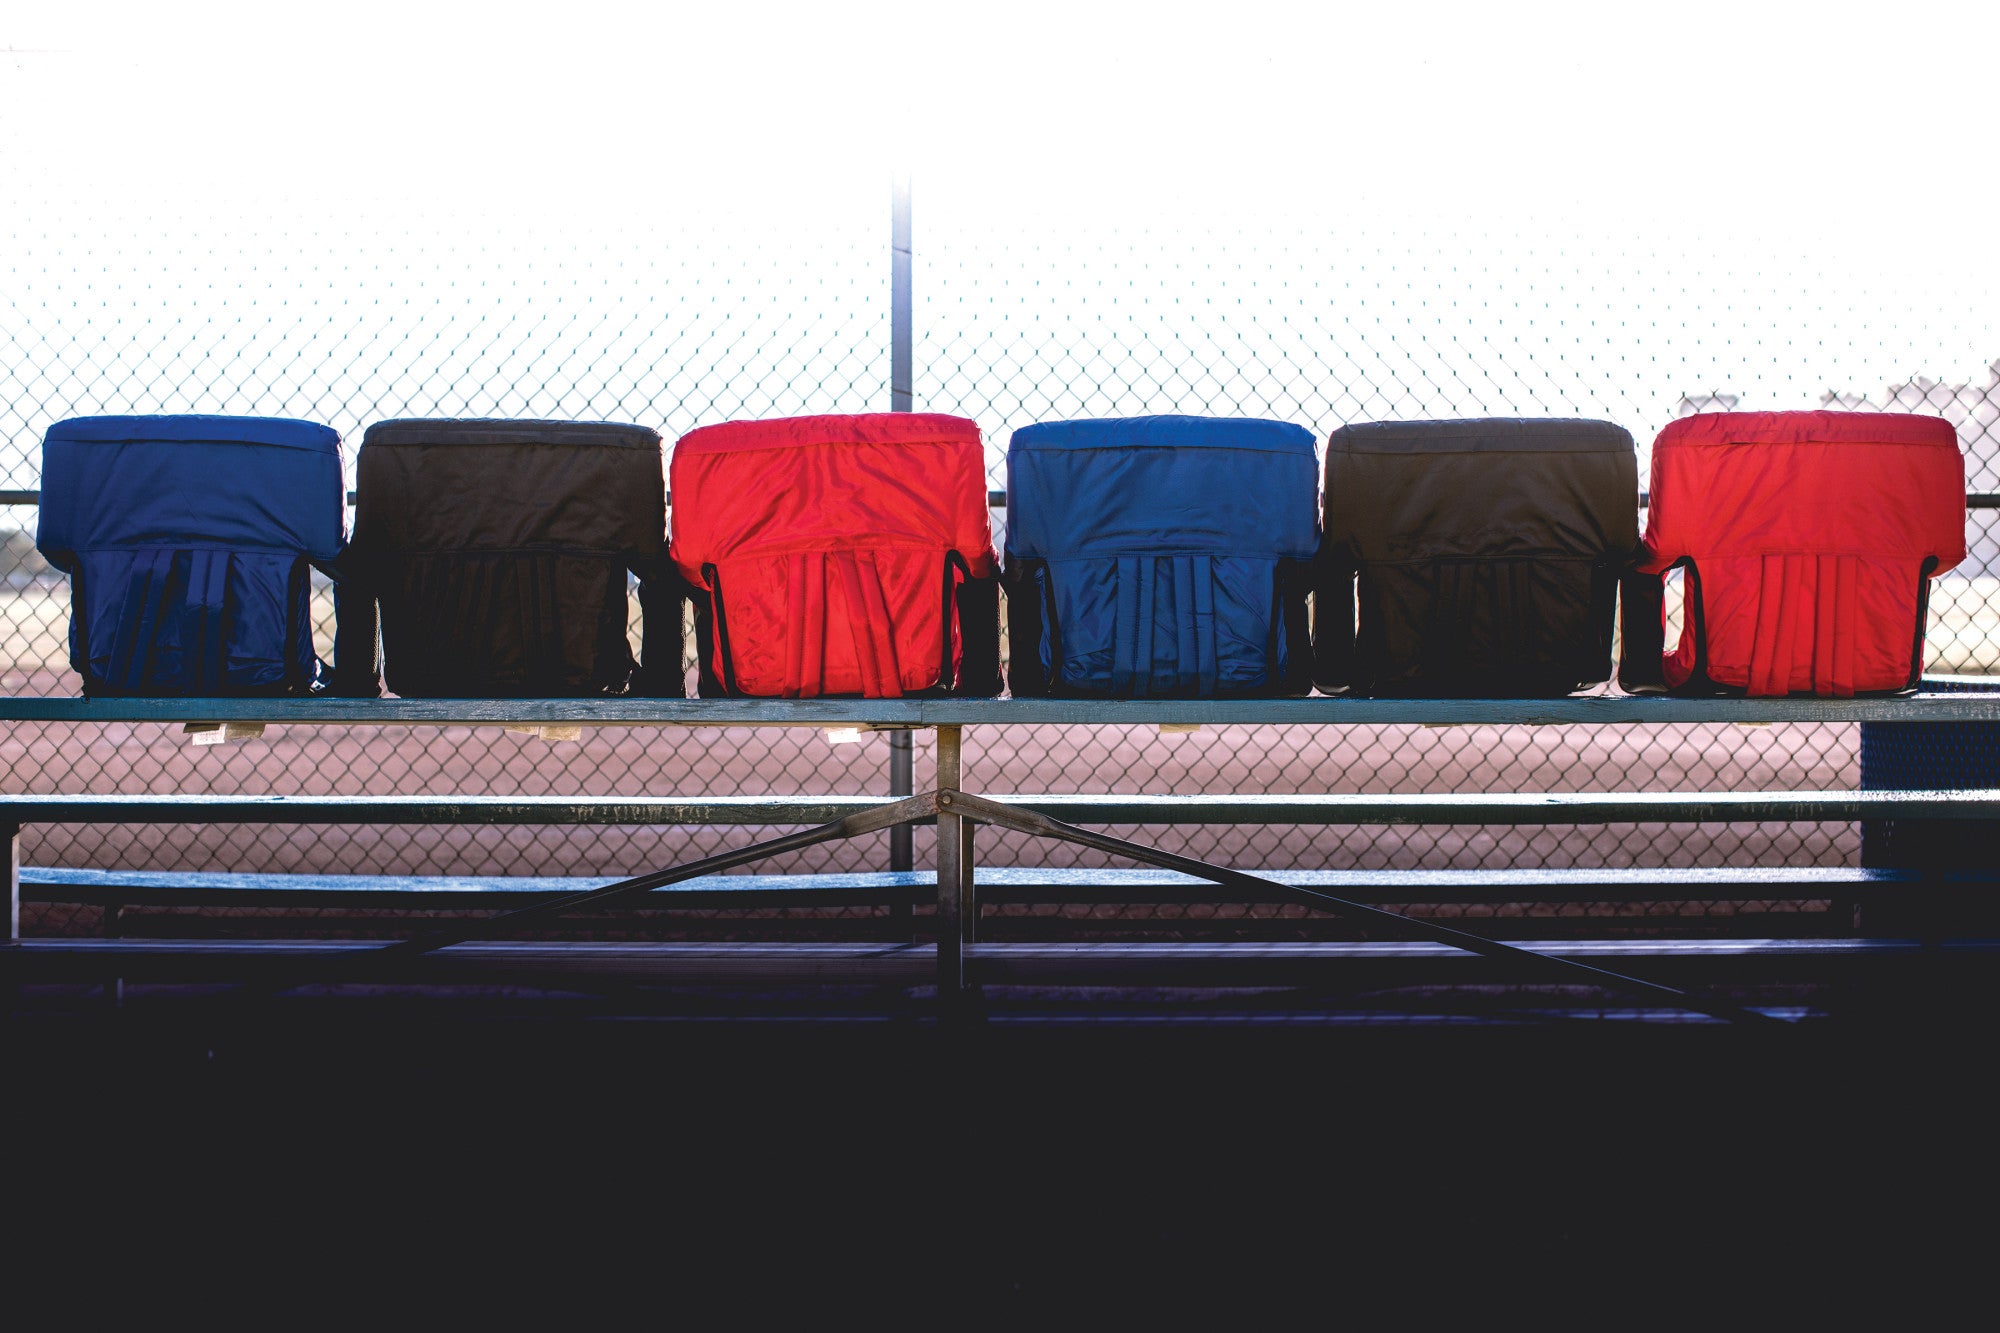 Washington Nationals - Ventura Portable Reclining Stadium Seat